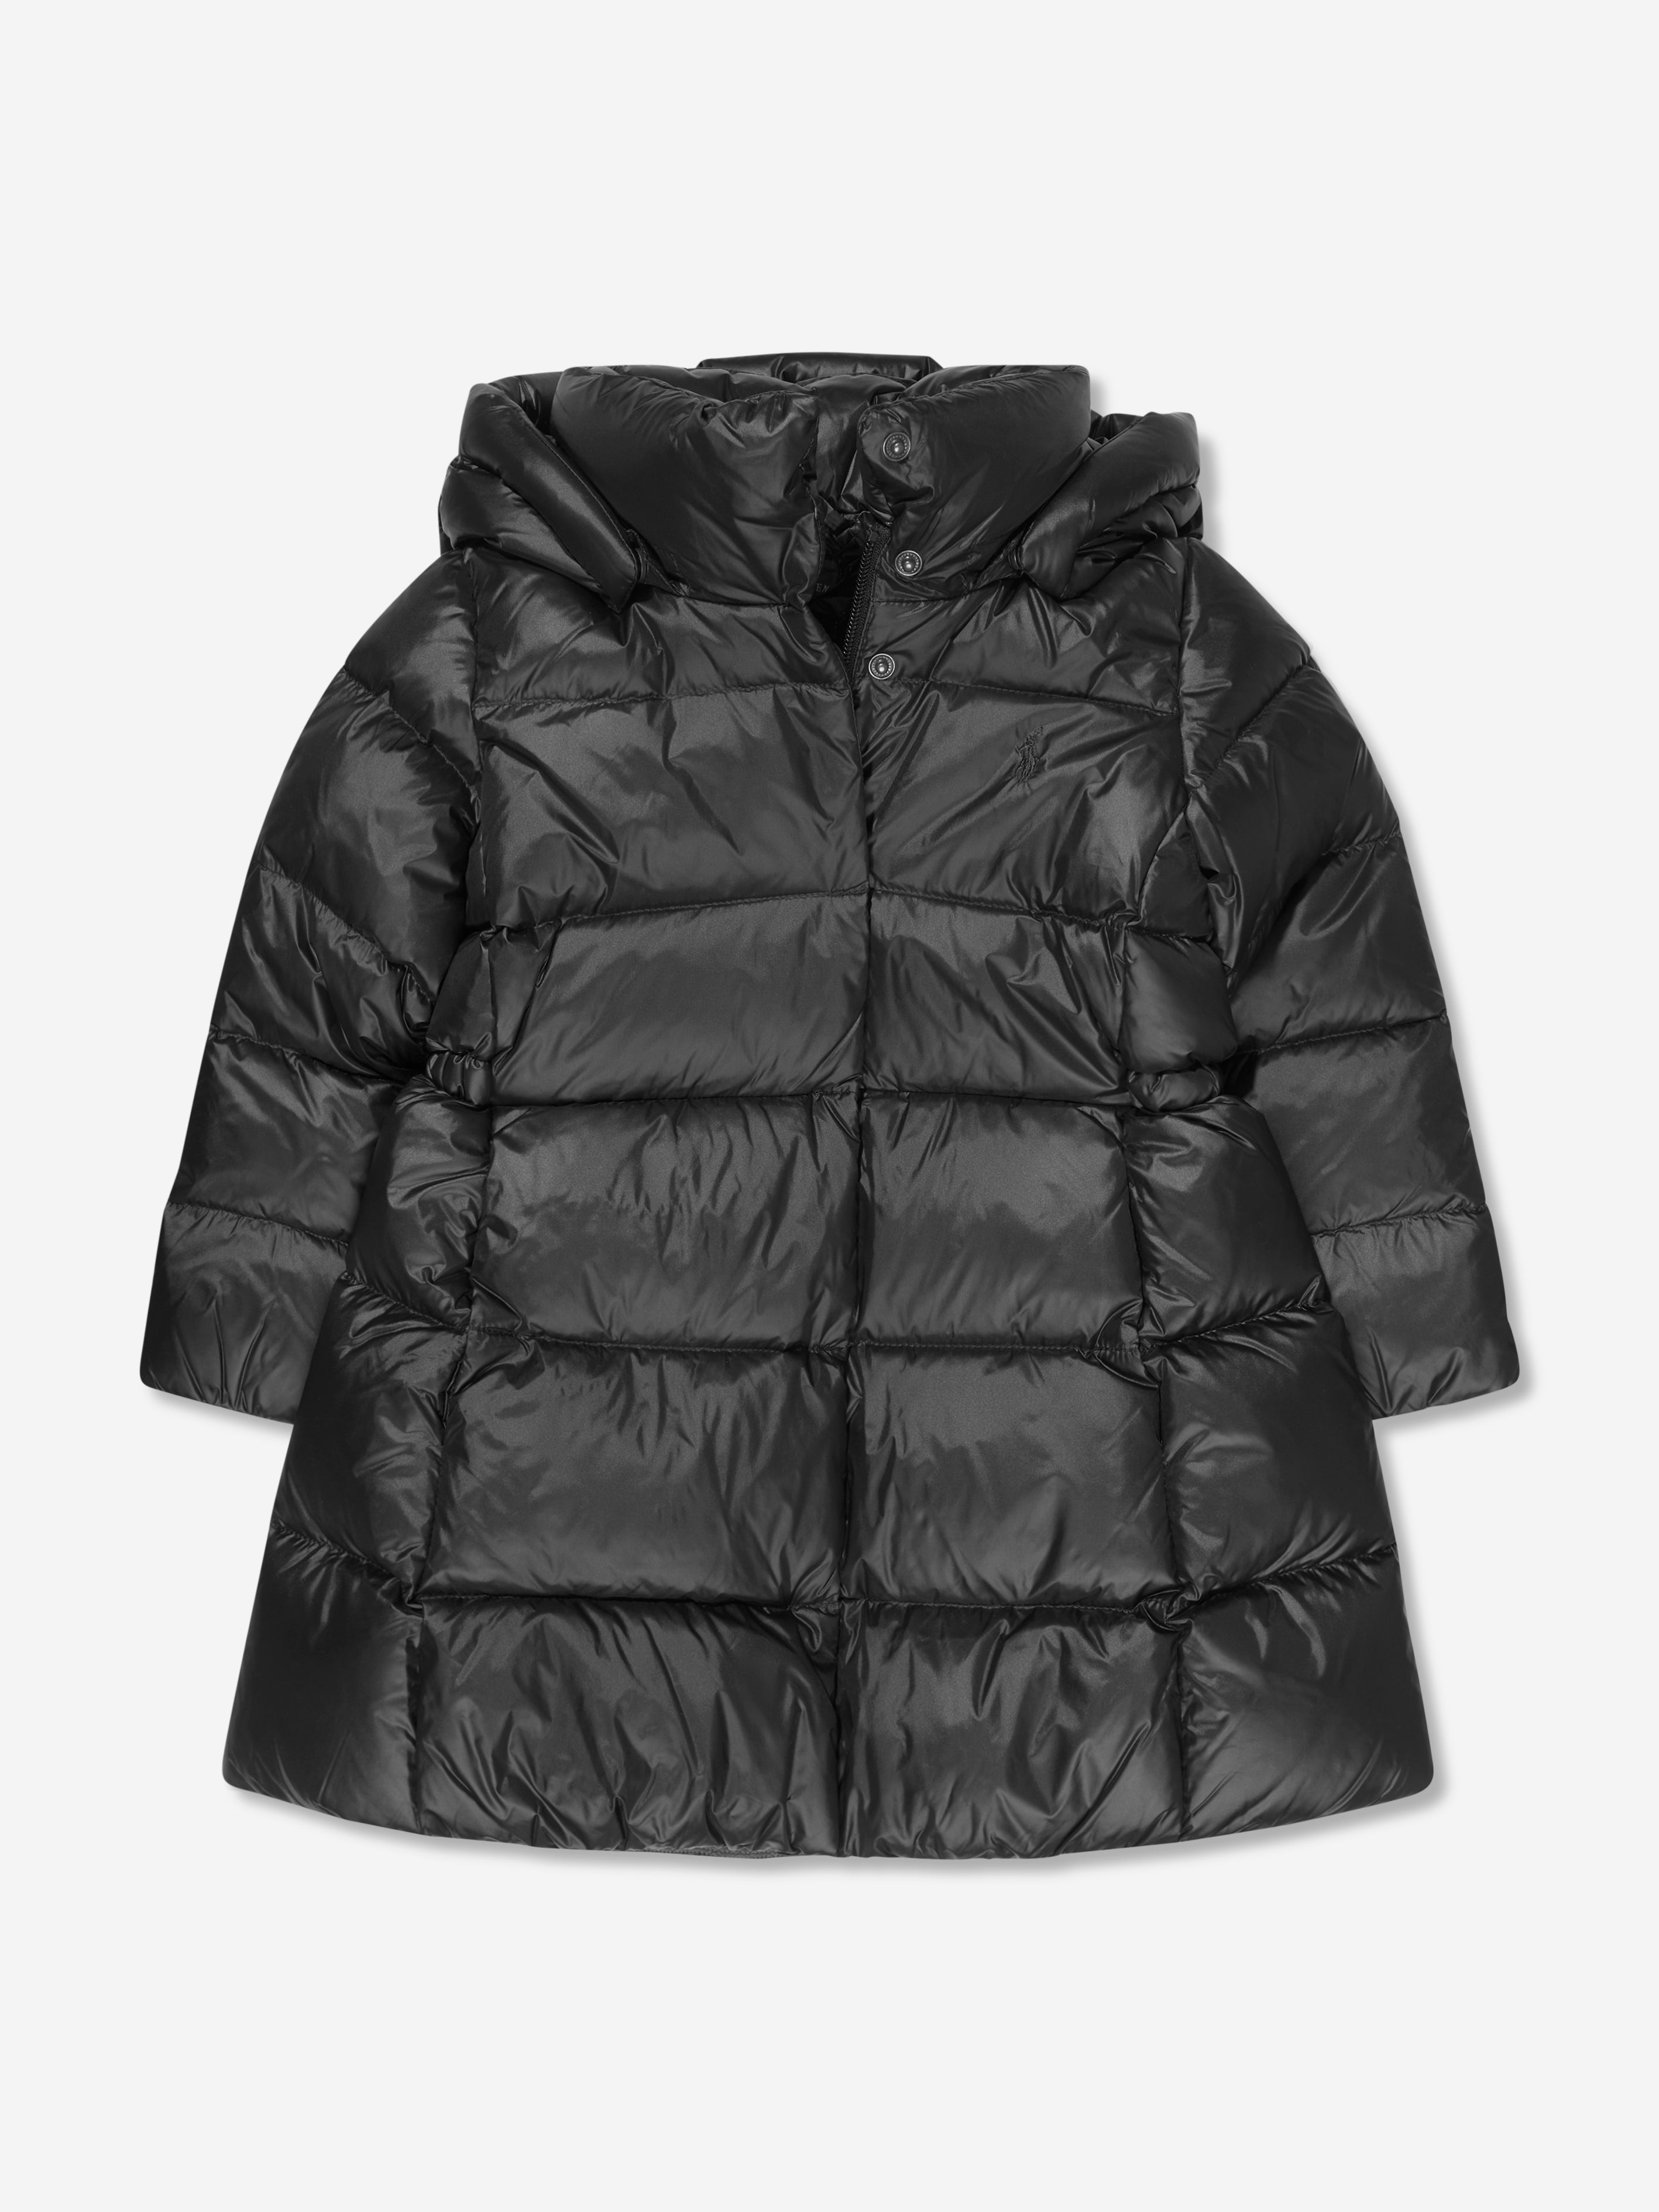 Girls Puffer Coat in Black | Childsplay Clothing